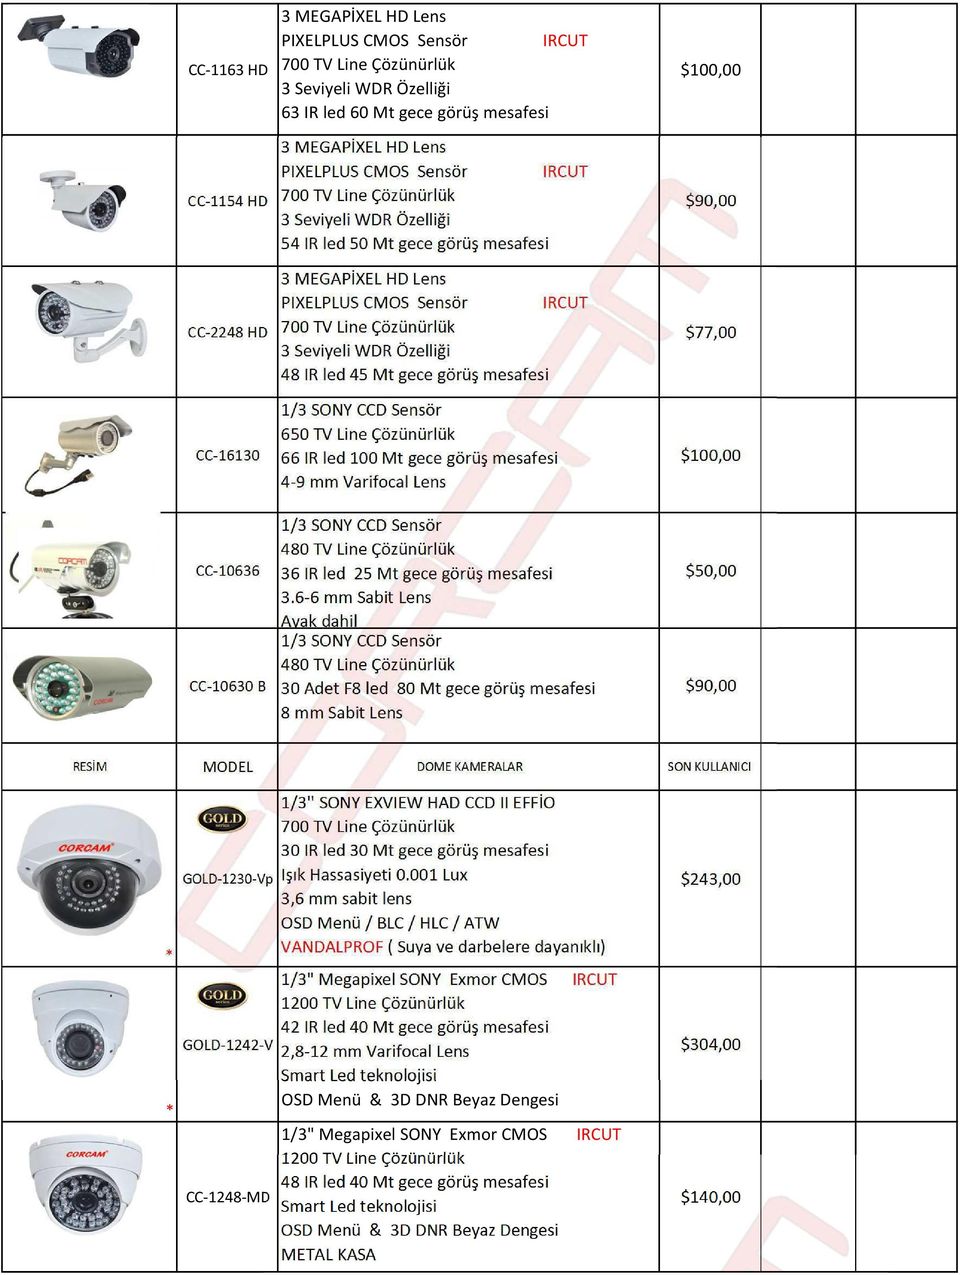 6-6 mm Sabit Lens Ayak dahil 30 Adet F8 led 80 Mt gece görüş mesafesi 8 mm Sabit Lens $90,00 $77,00 $100,00 $50,00 $90,00 RESİM MODEL DOME KAMERALAR SON KULLANICI GOLD-1230-Vp